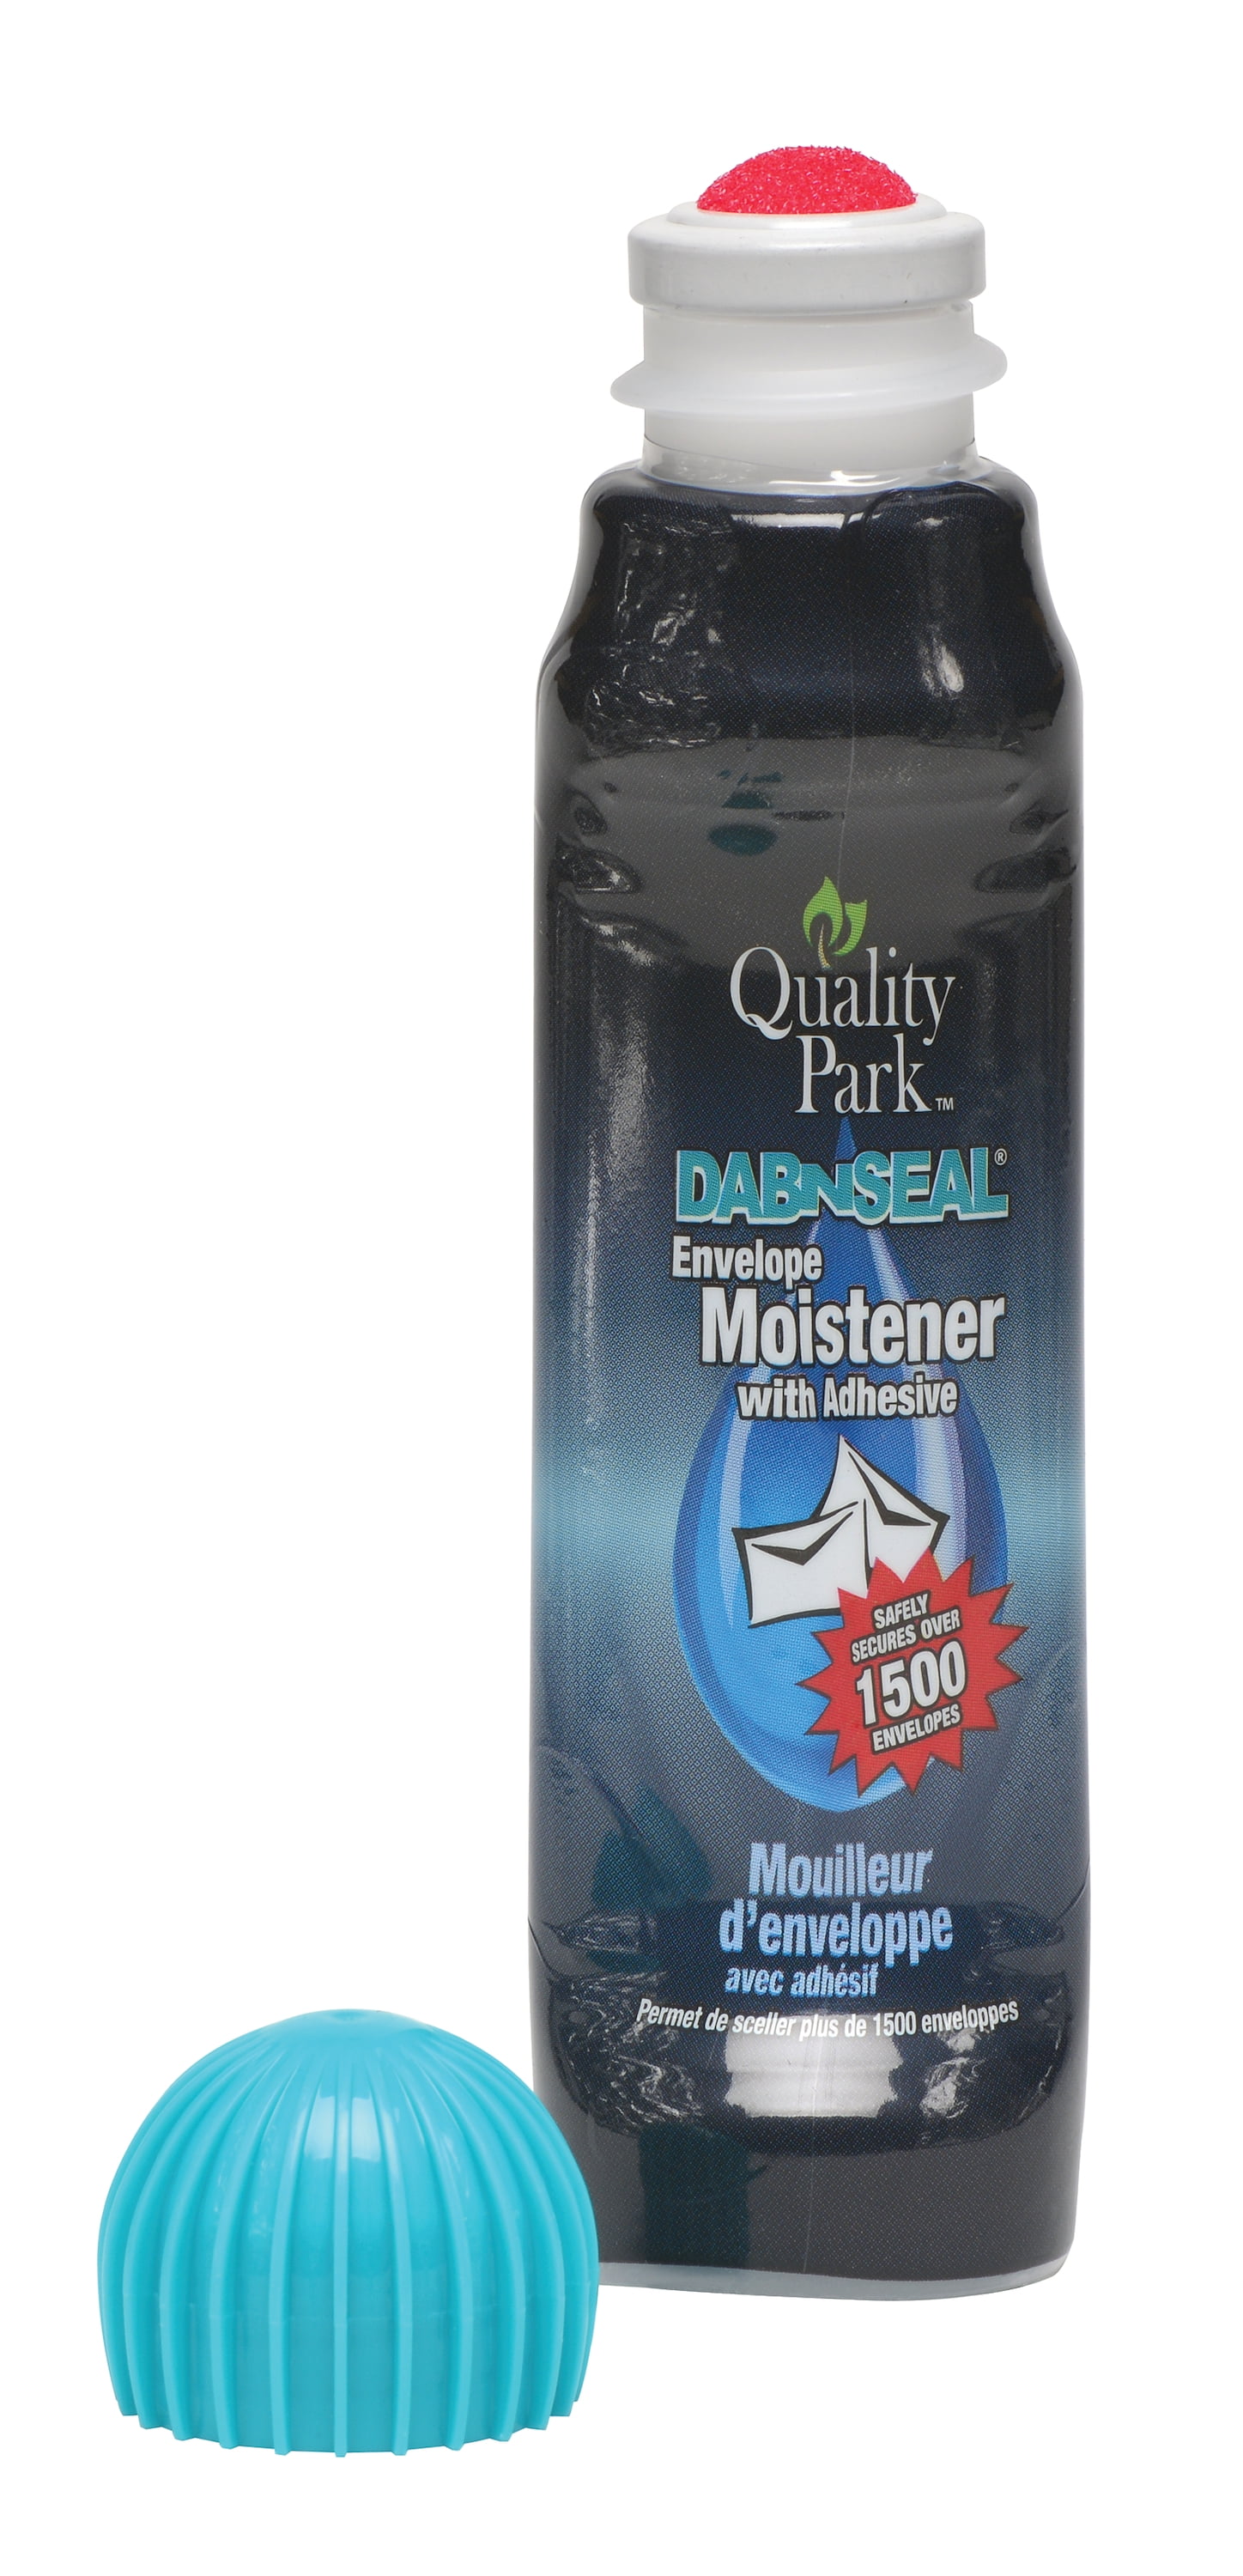 Quality Park Envelope Moistener with Adhesive, 50 ml. Bottle